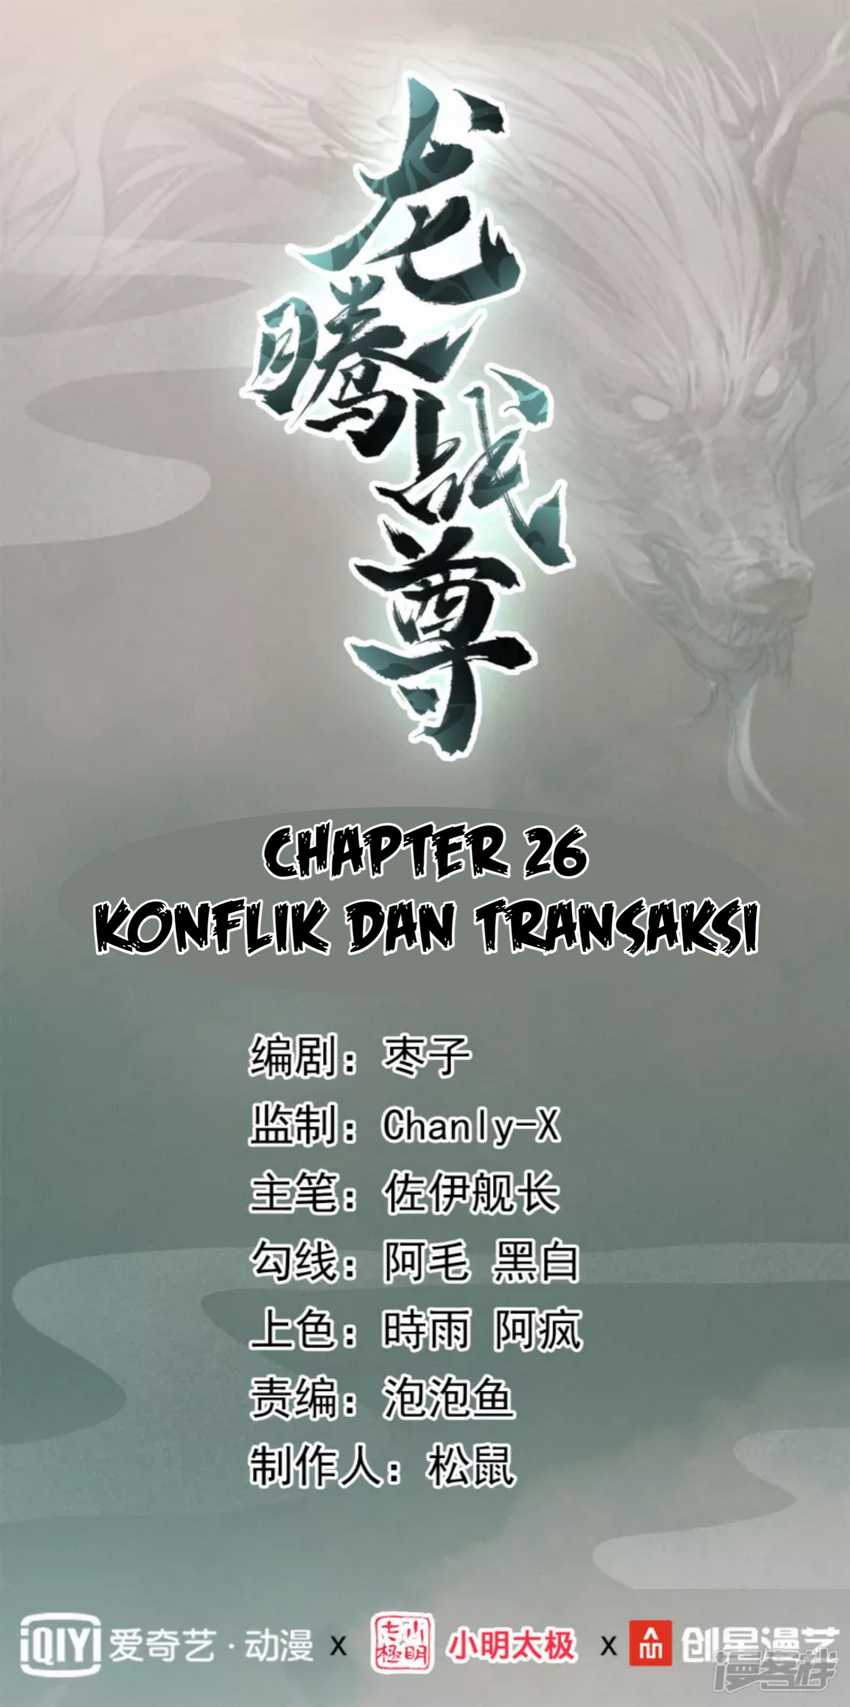 Venerable War Dragon Chapter 26